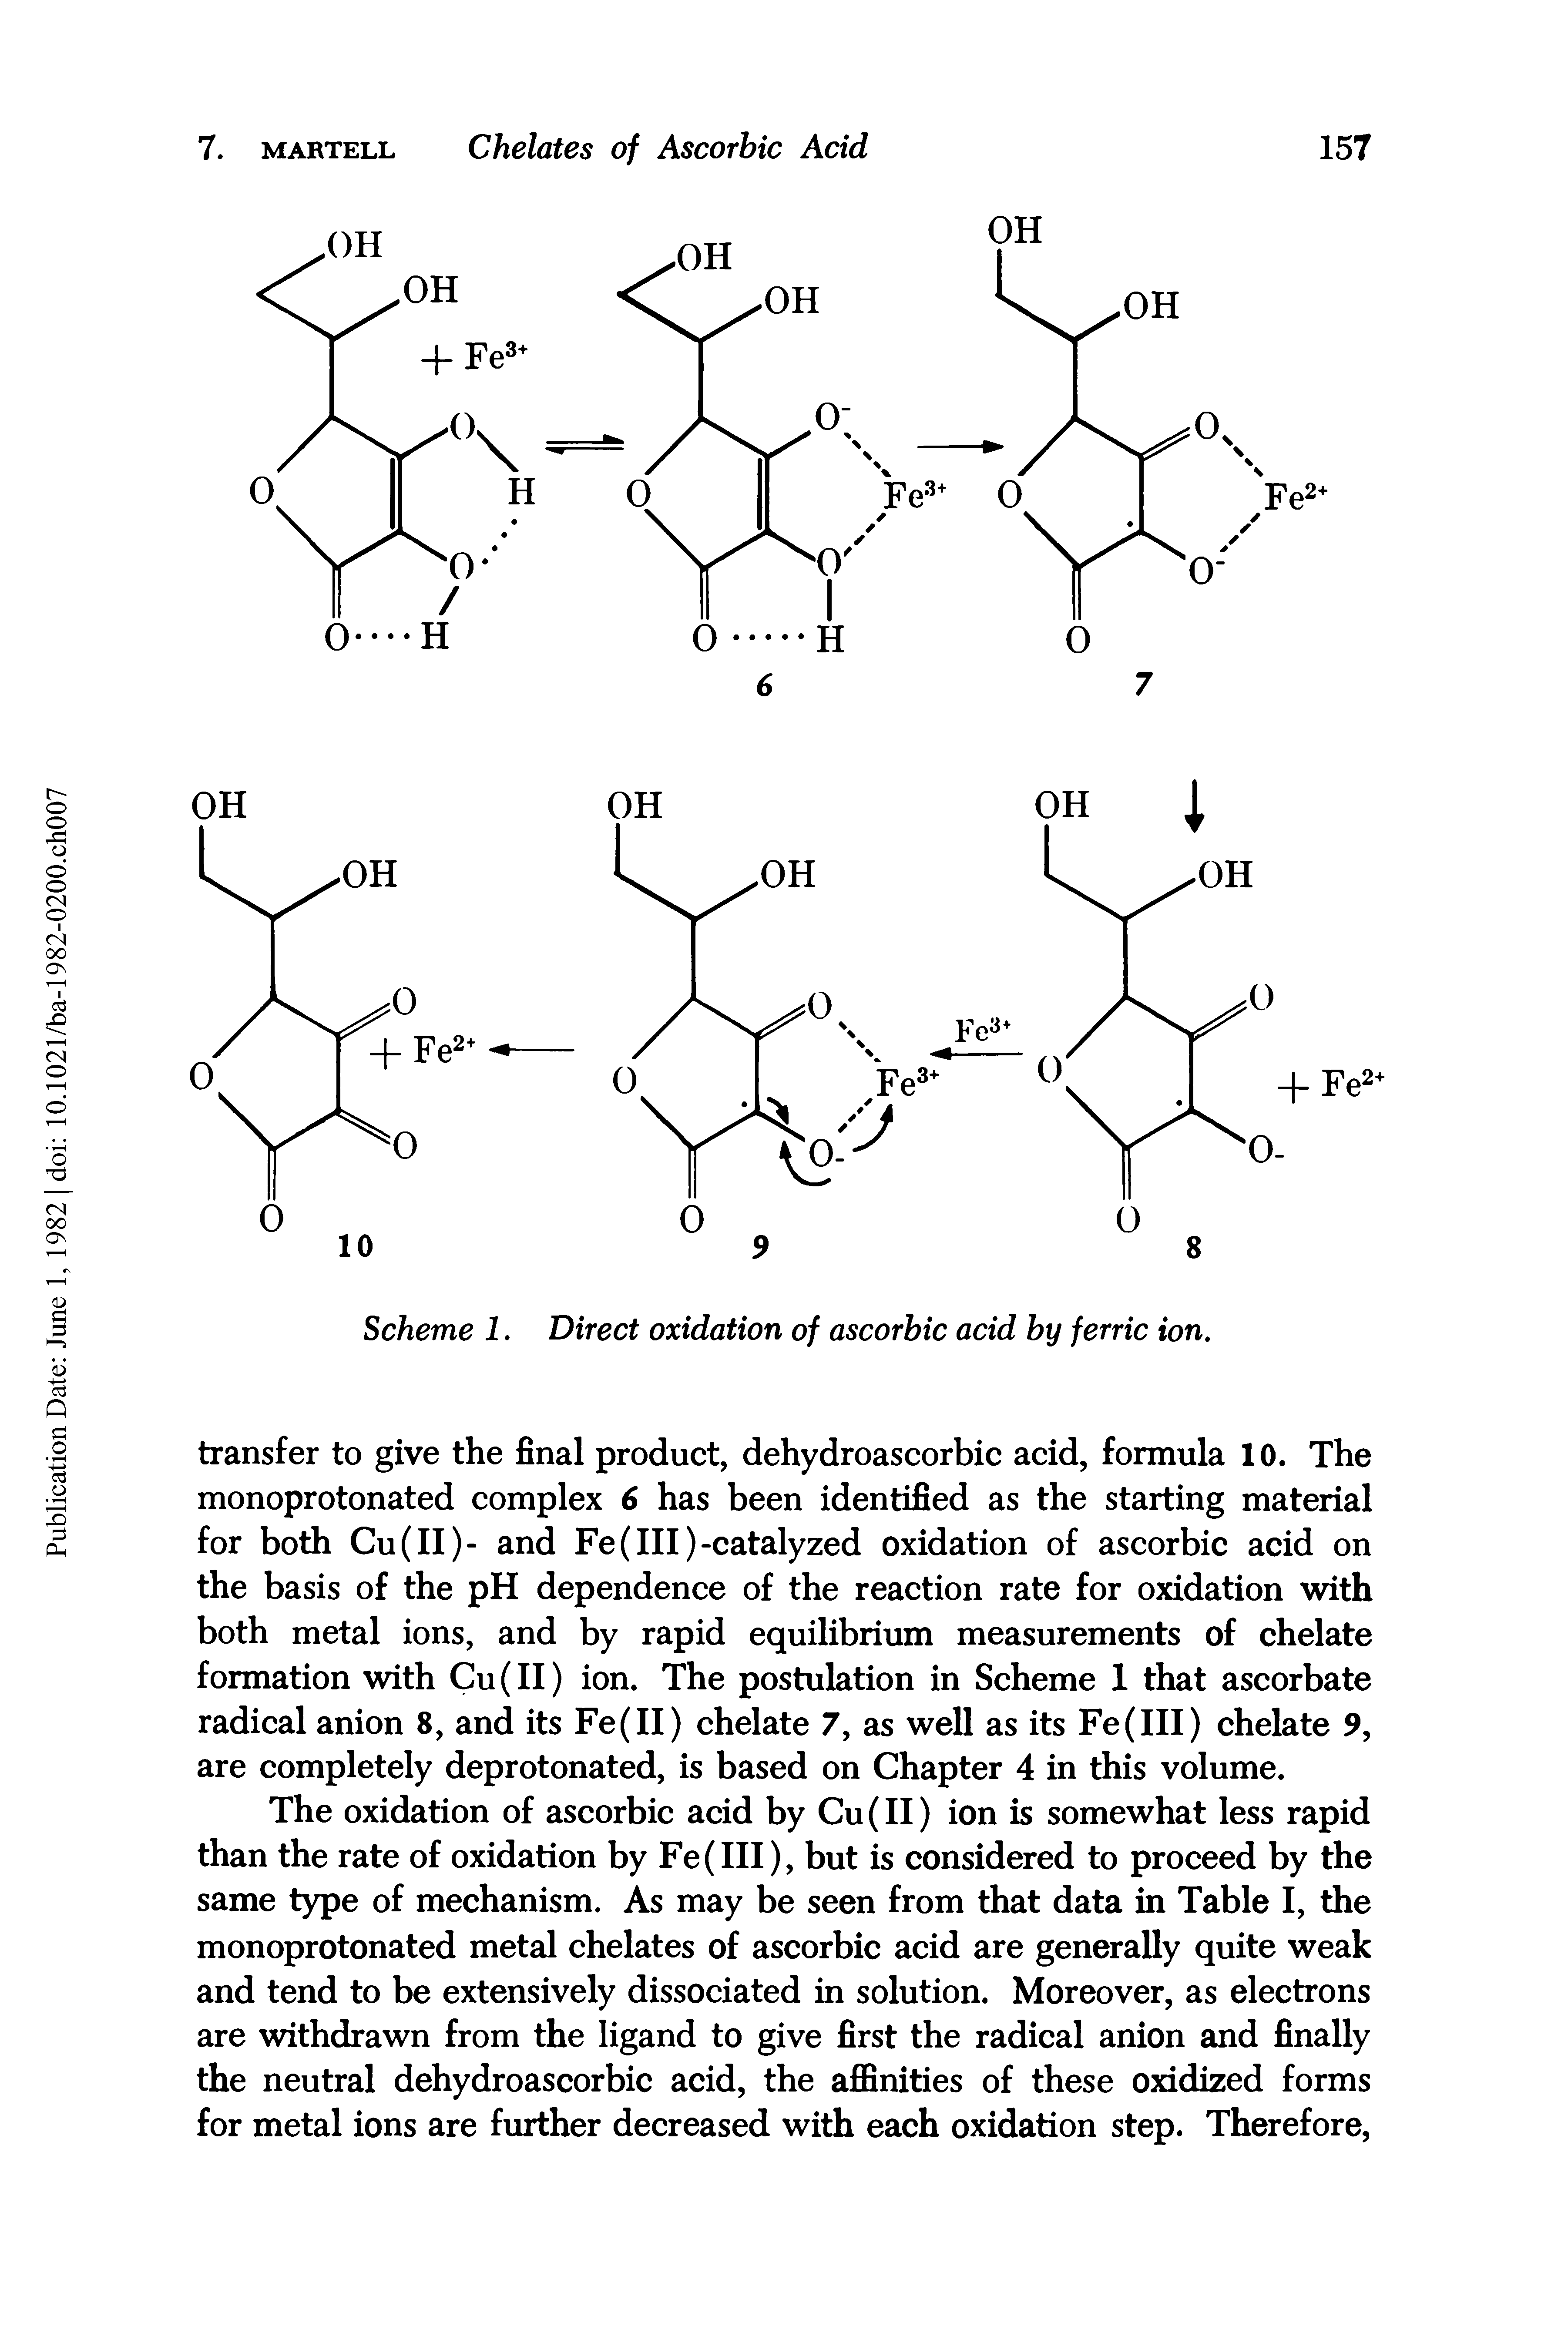 Scheme 1. Direct oxidation of ascorbic acid by ferric ion.